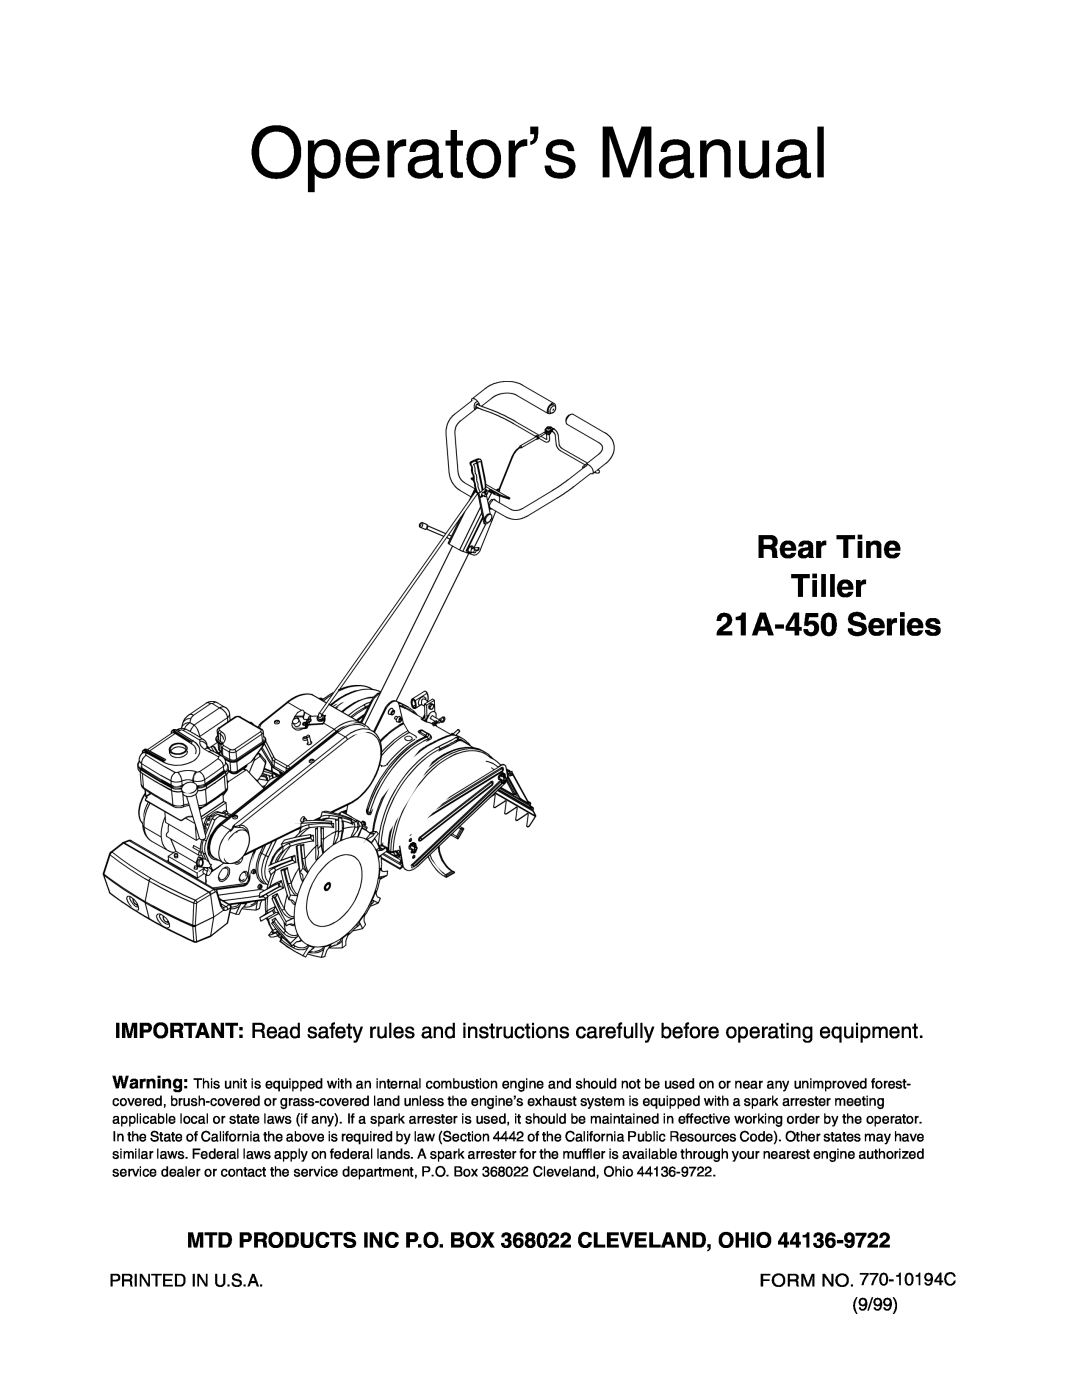 MTD manual Operator’s Manual, Rear Tine Tiller 21A-450 Series, MTD PRODUCTS INC P.O. BOX 368022 CLEVELAND, OHIO 